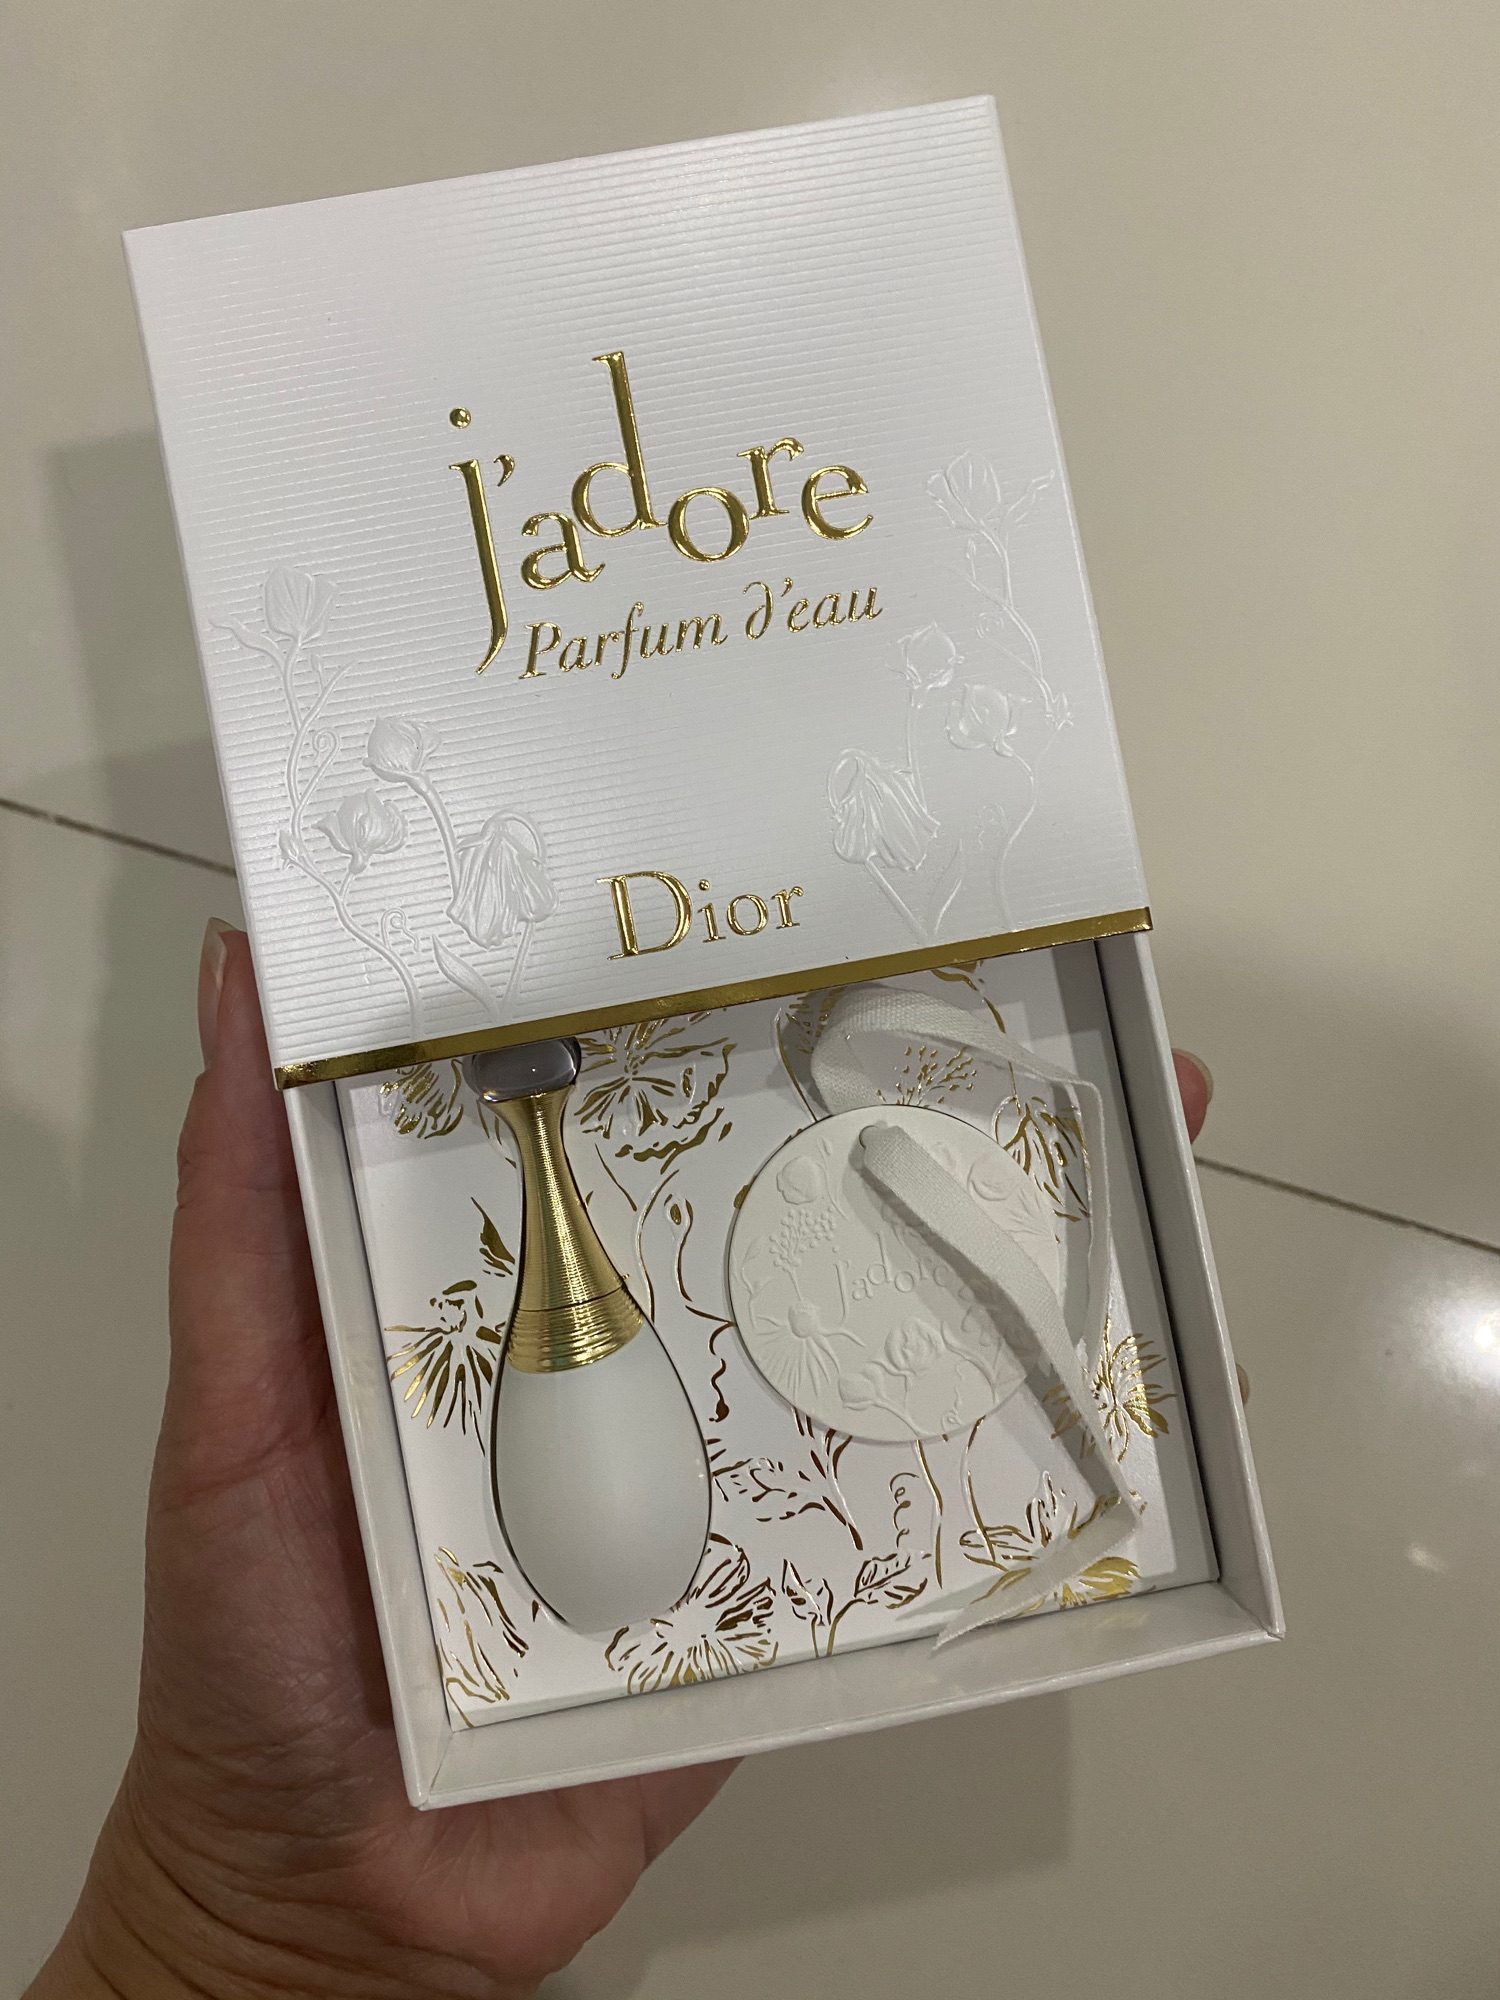 Dior perfume set of 3 Travel size Miniature set เซ็ตน้ำหอมพร้อมถุง